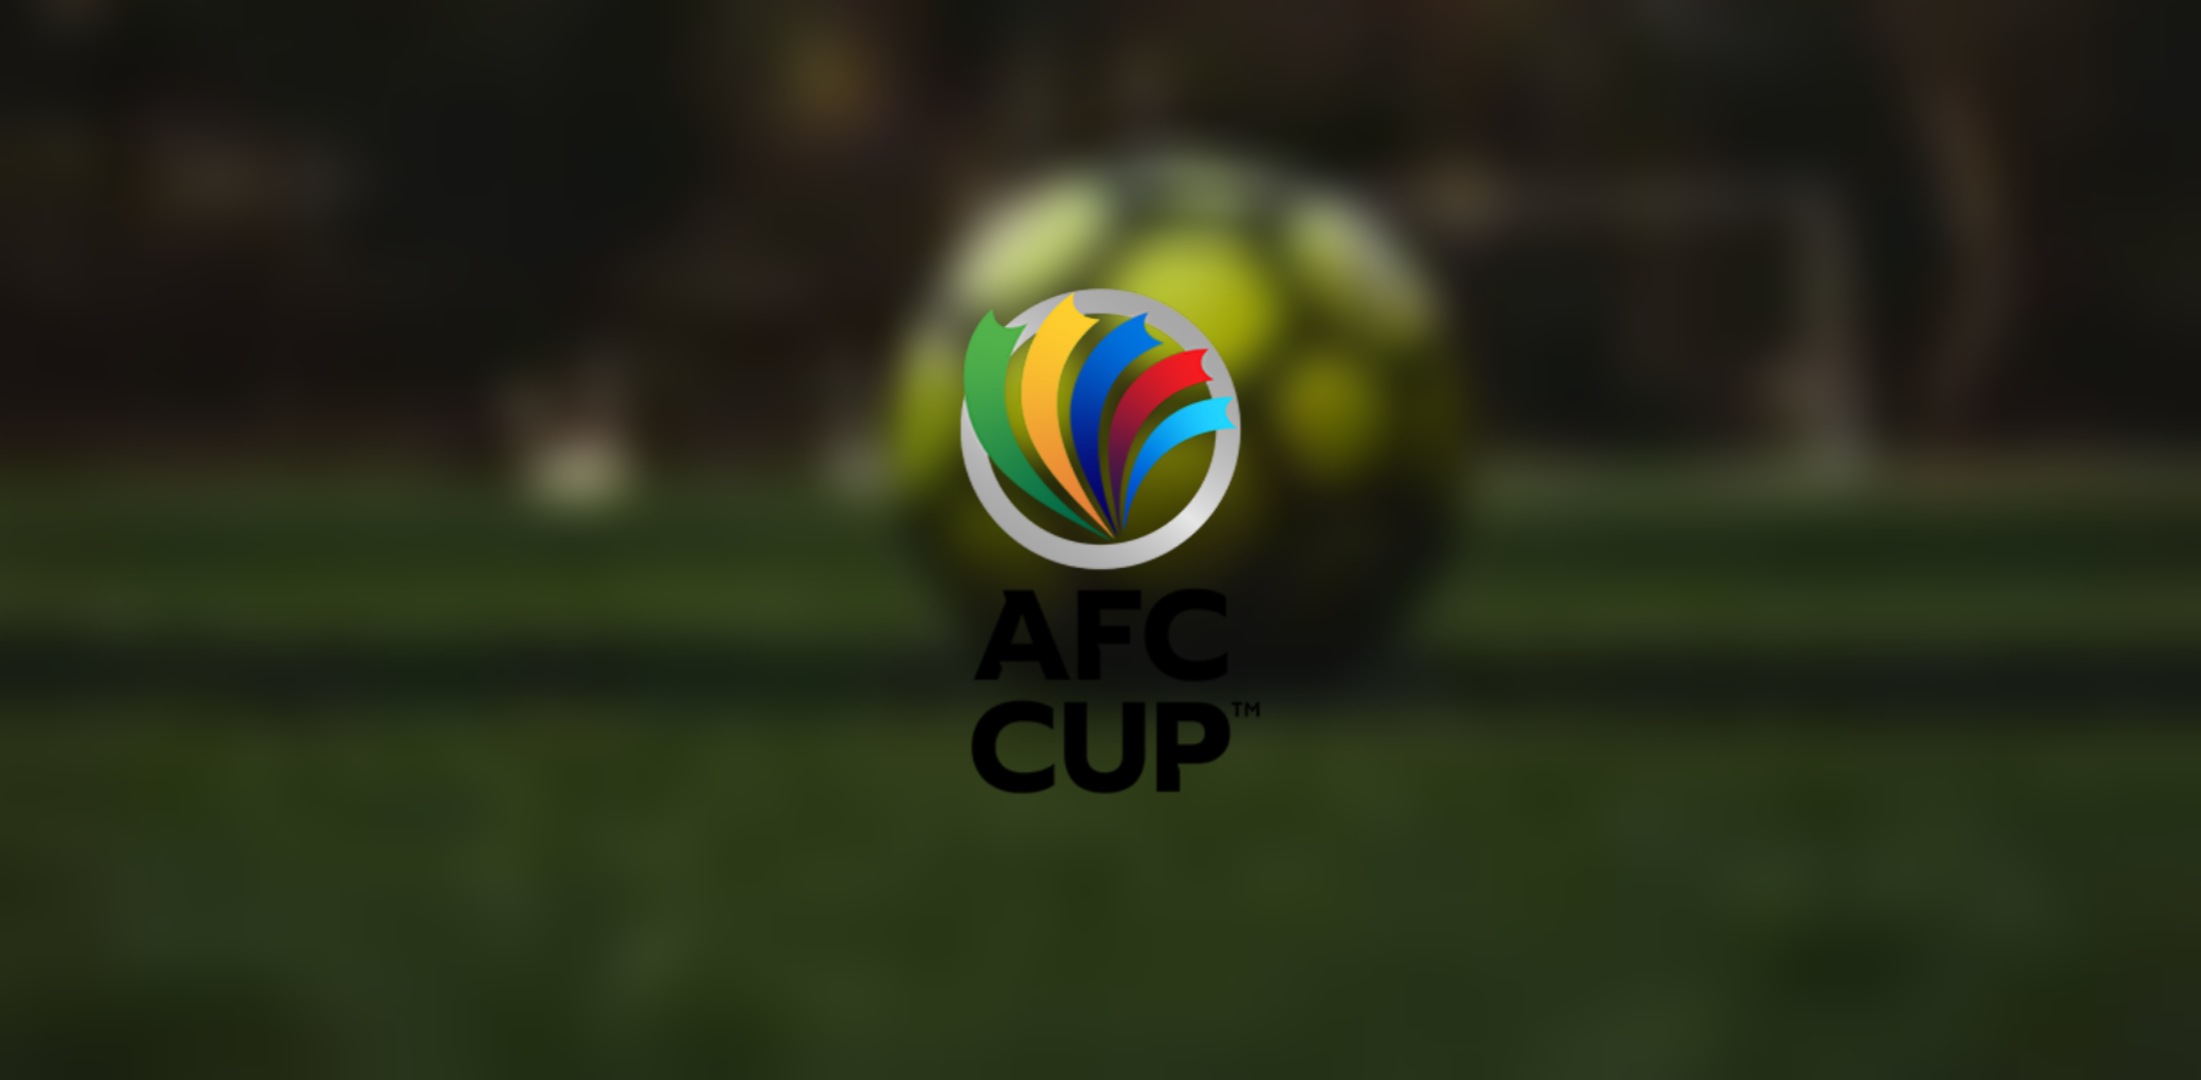 2021 jadual afc cup Jadual Perlawanan